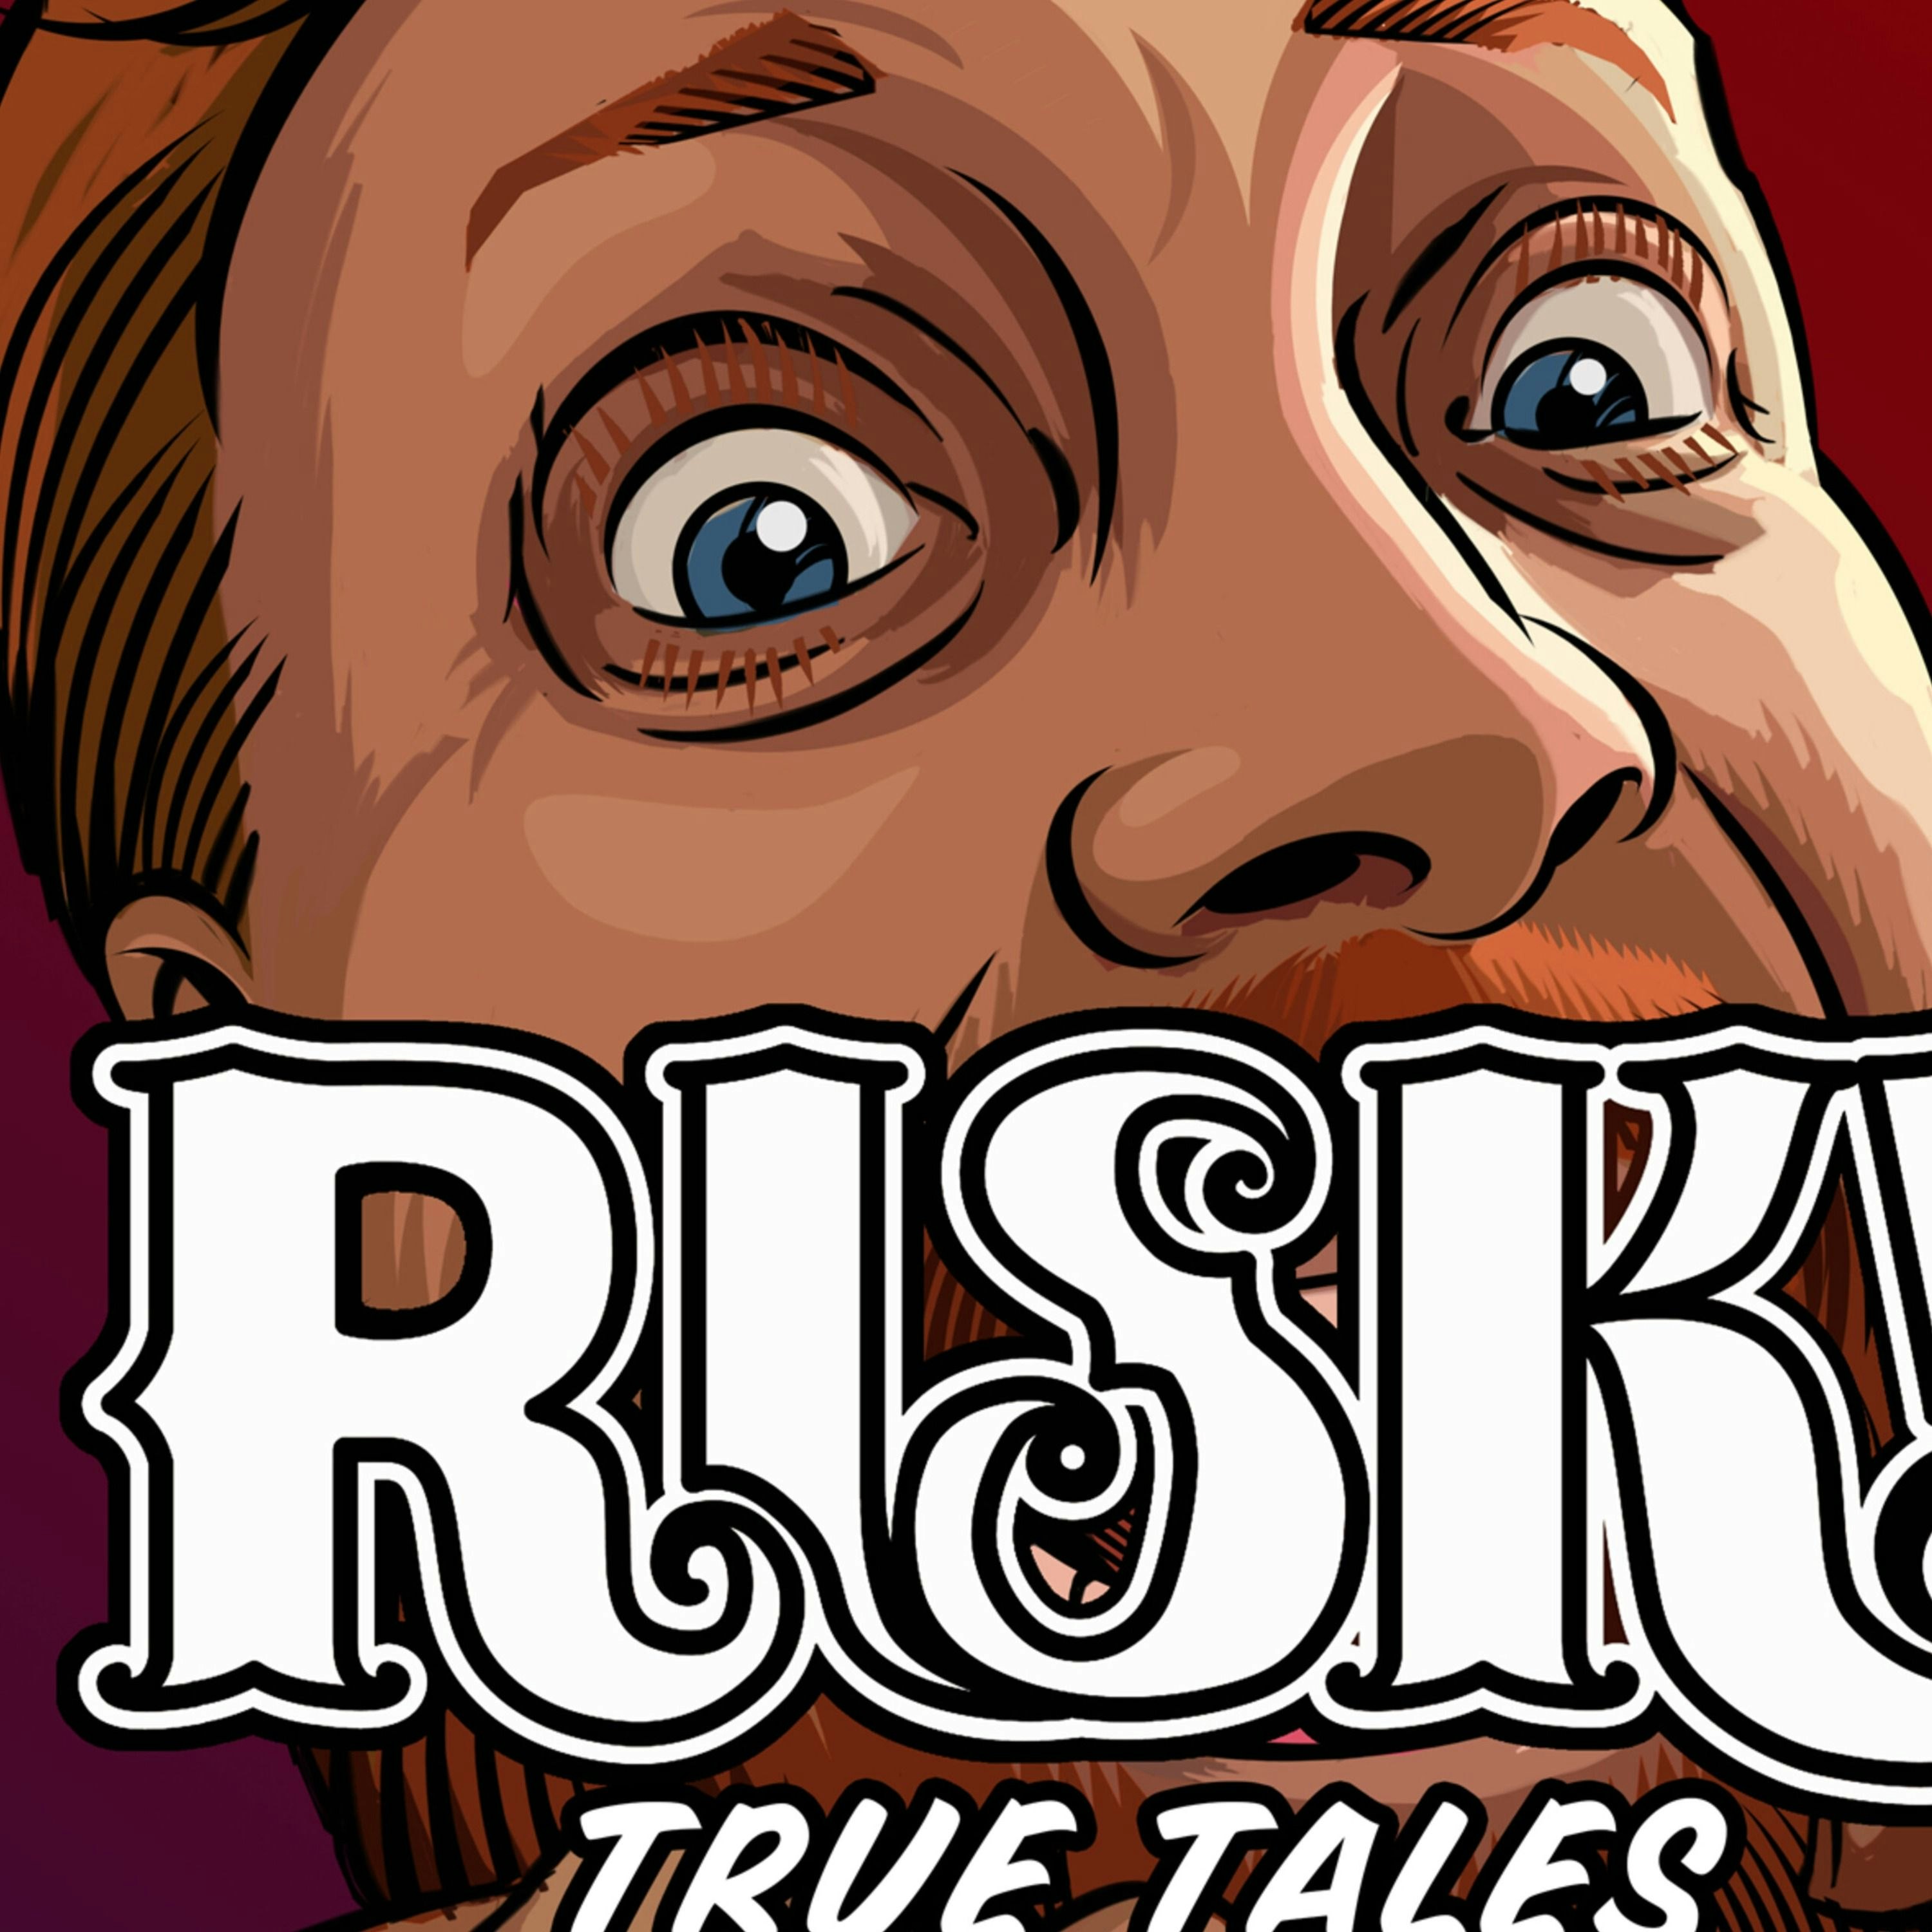 RISK! Premium Podcast Leader